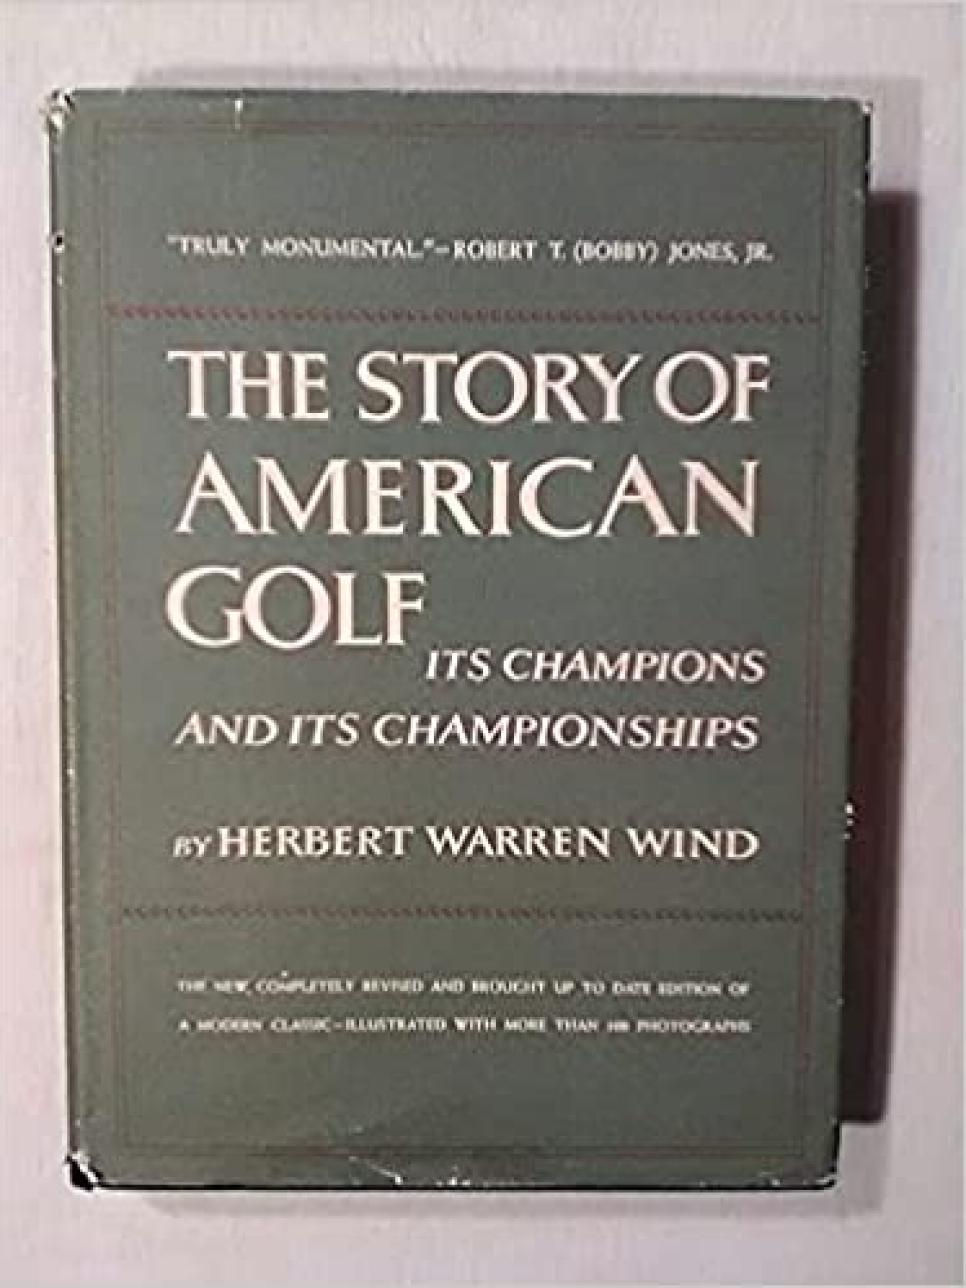 The Story of American Golf By Herbert Warren Wind (1948)